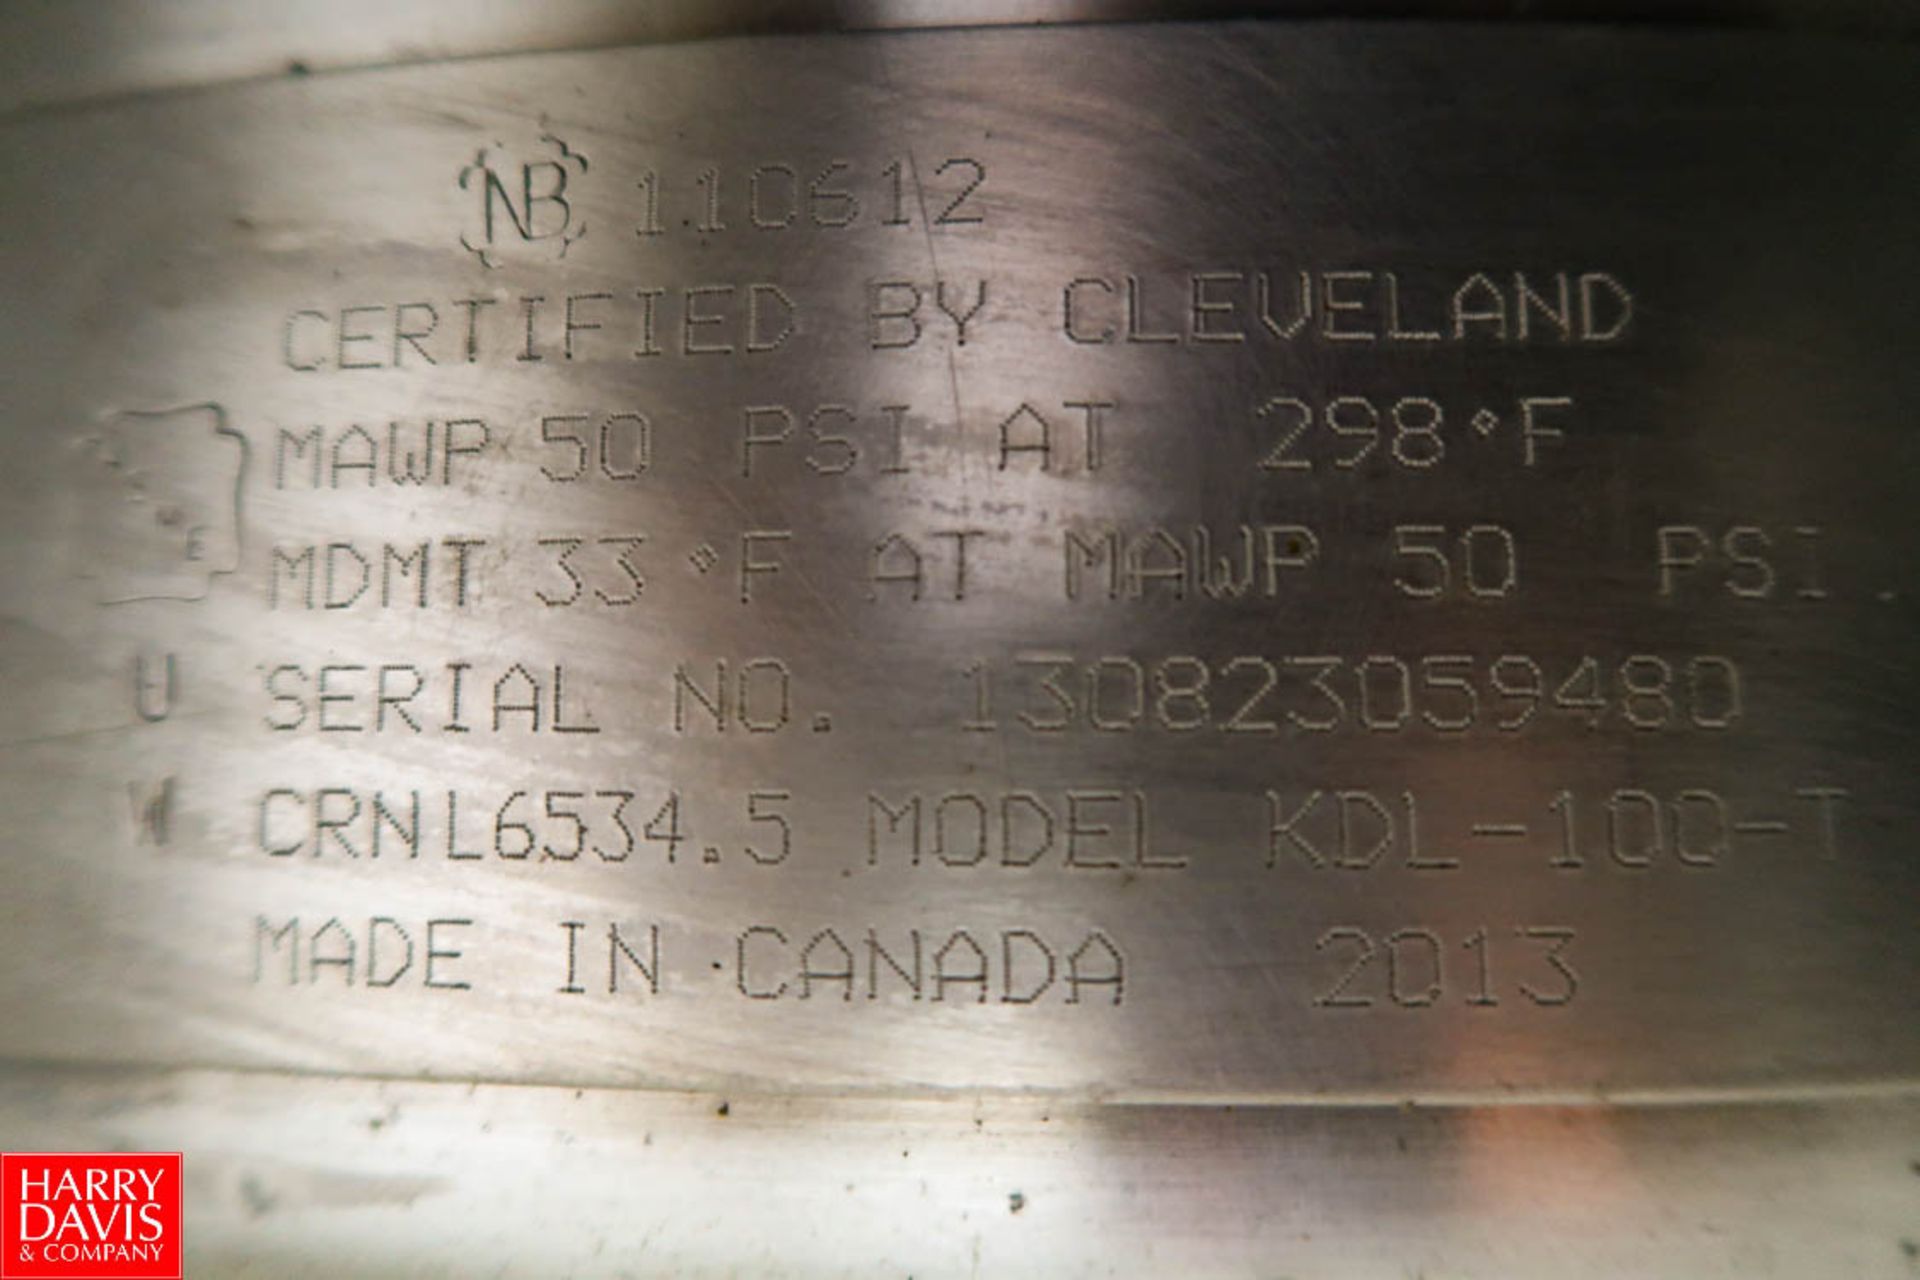 2013 Cleveland 100 Gallon S/S Jacketed Tilting Kettle Model: KDL-100-T S/N: 130823059480. Rigging - Image 4 of 4